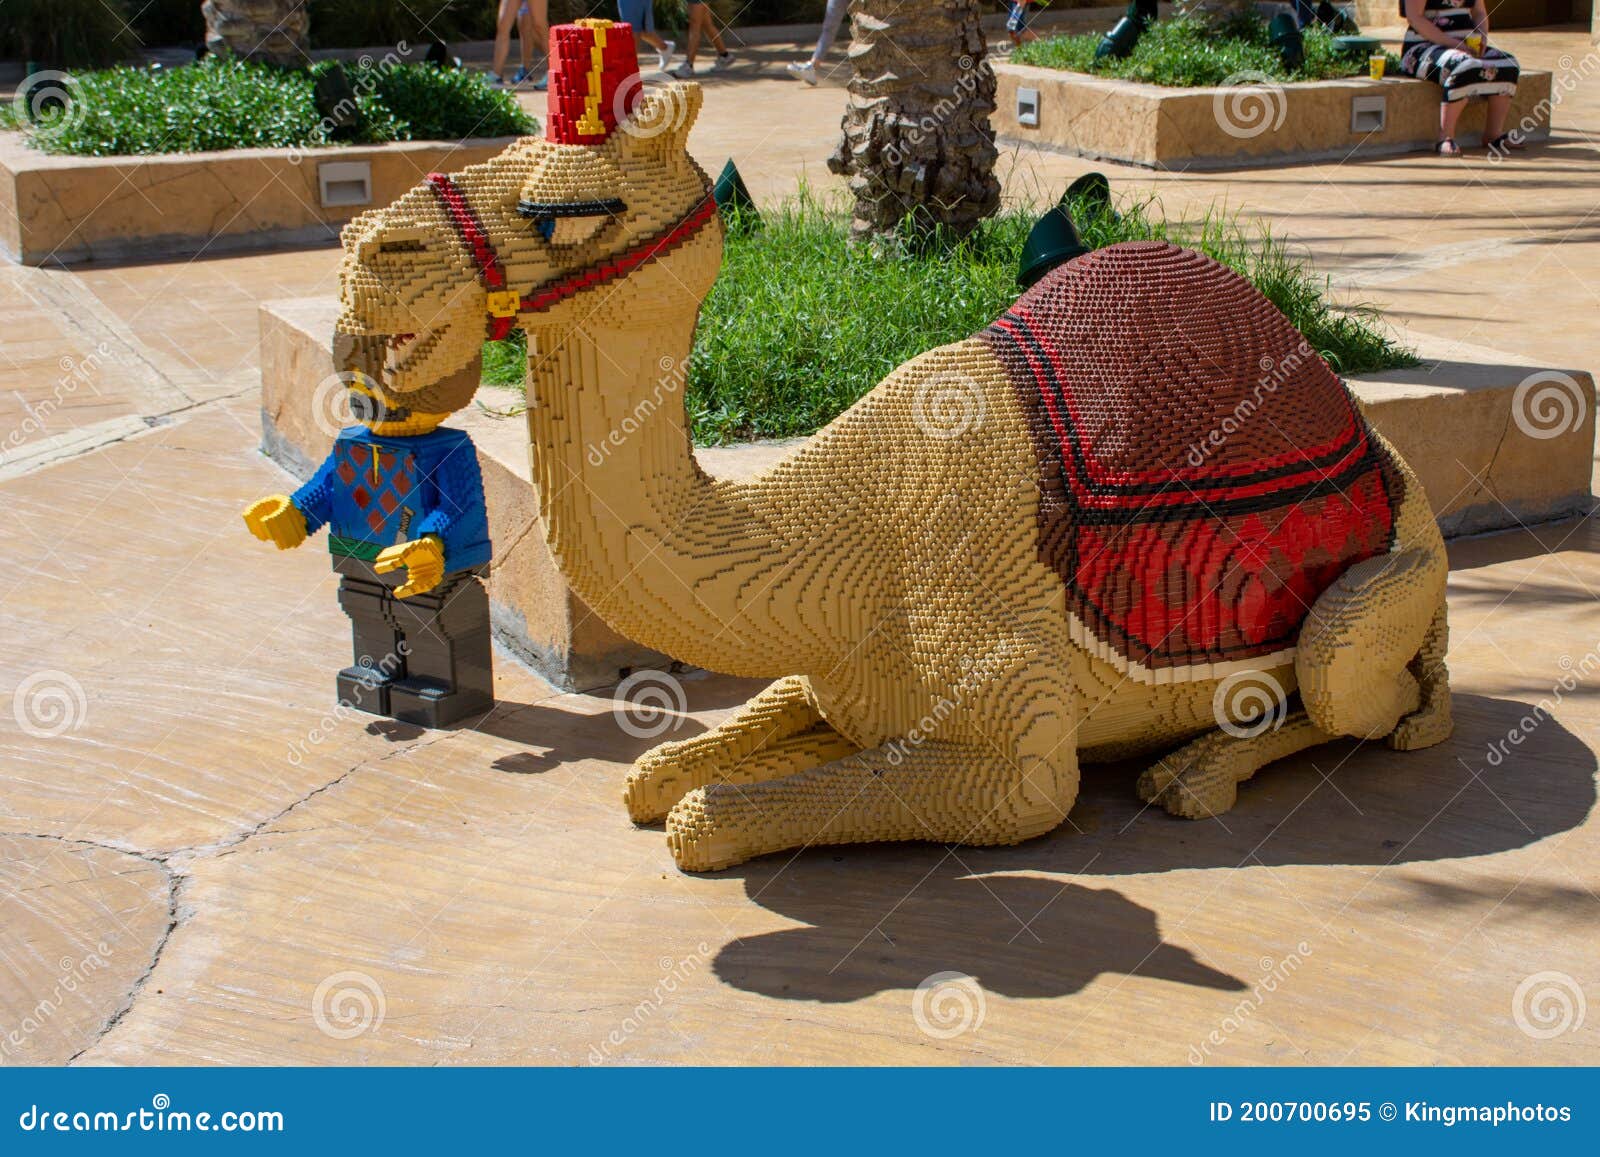 dubai-united-arab-emirates-legoland-theme-park-resort-children-lego-large-camel-statue-outside-lost-kingdom-adventure-luxury-200700695.jpg